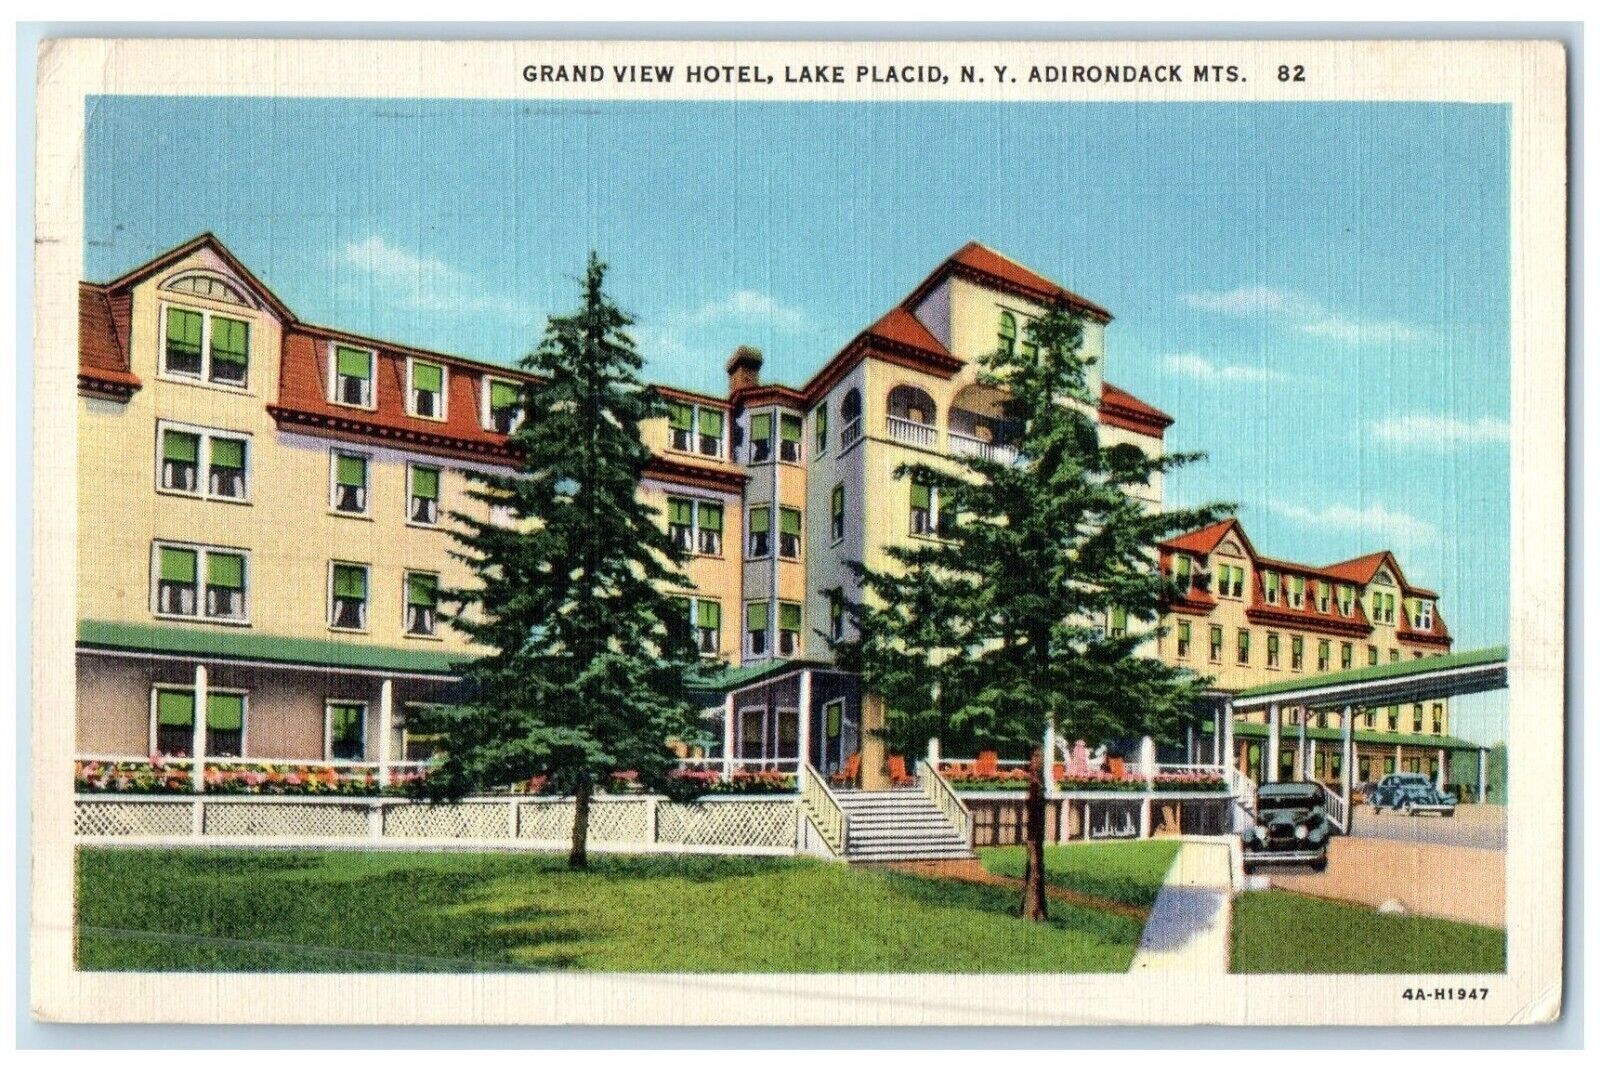 1938 Grand View Hotel Lake Placid New York NY, Adirondacks Mountains Postcard